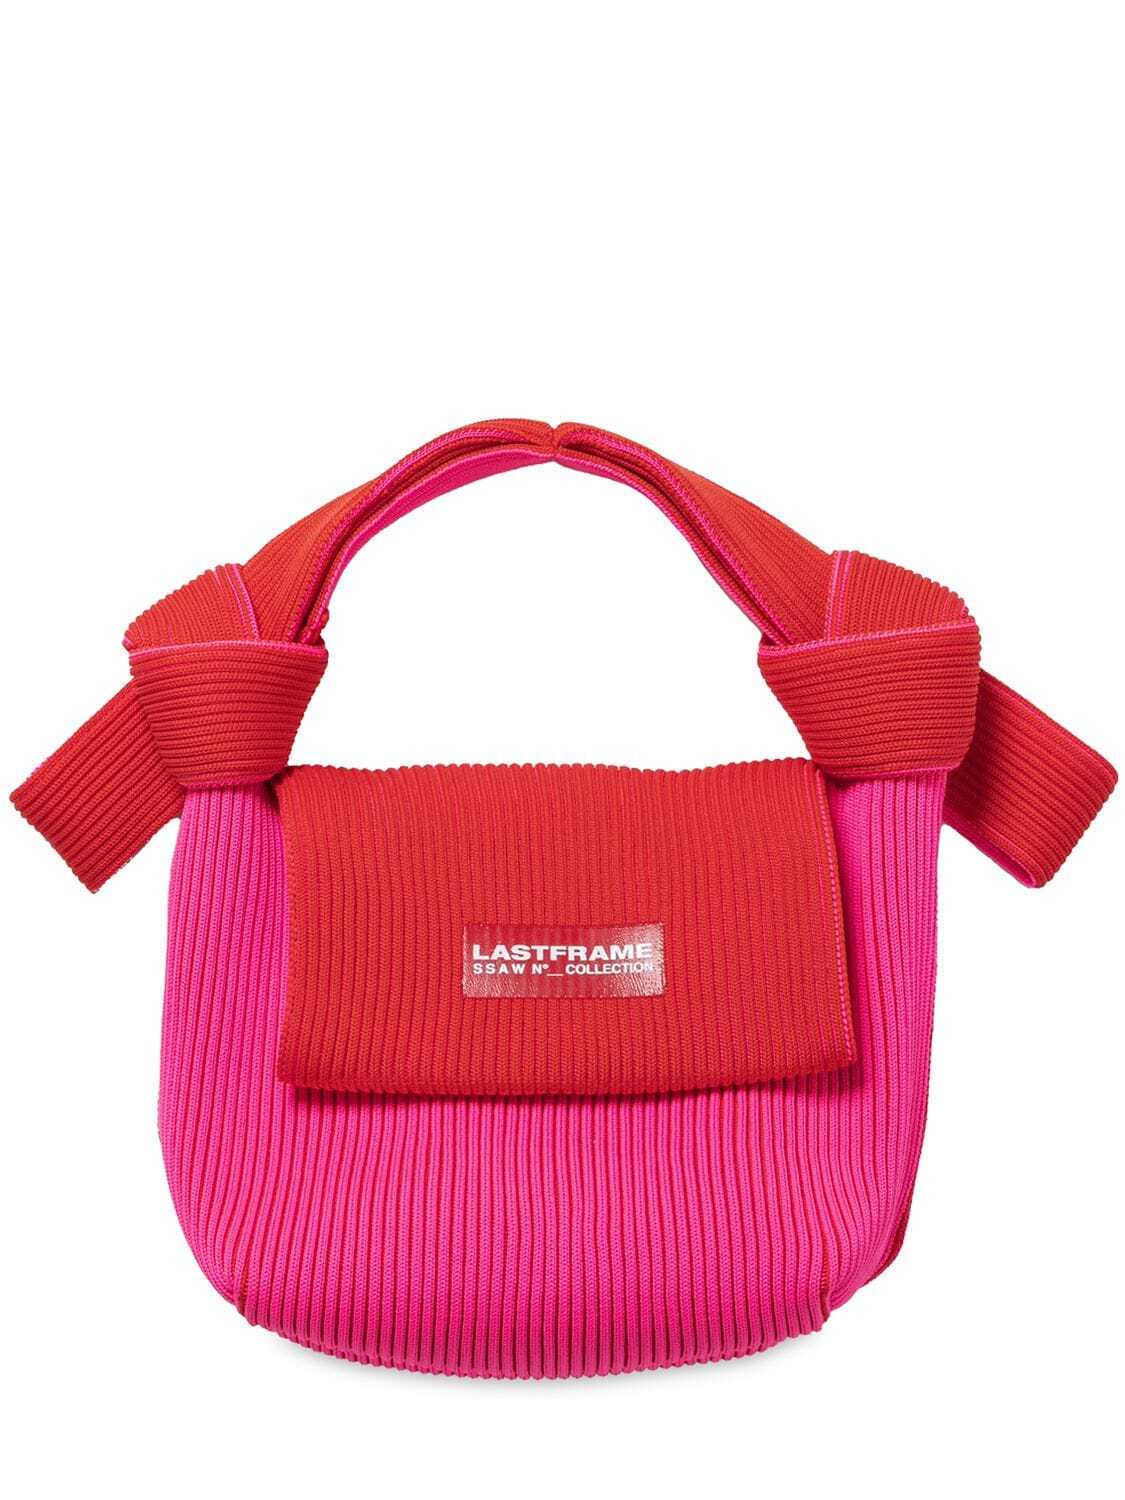 LASTFRAME Bi-color Obi Bag in pink / red